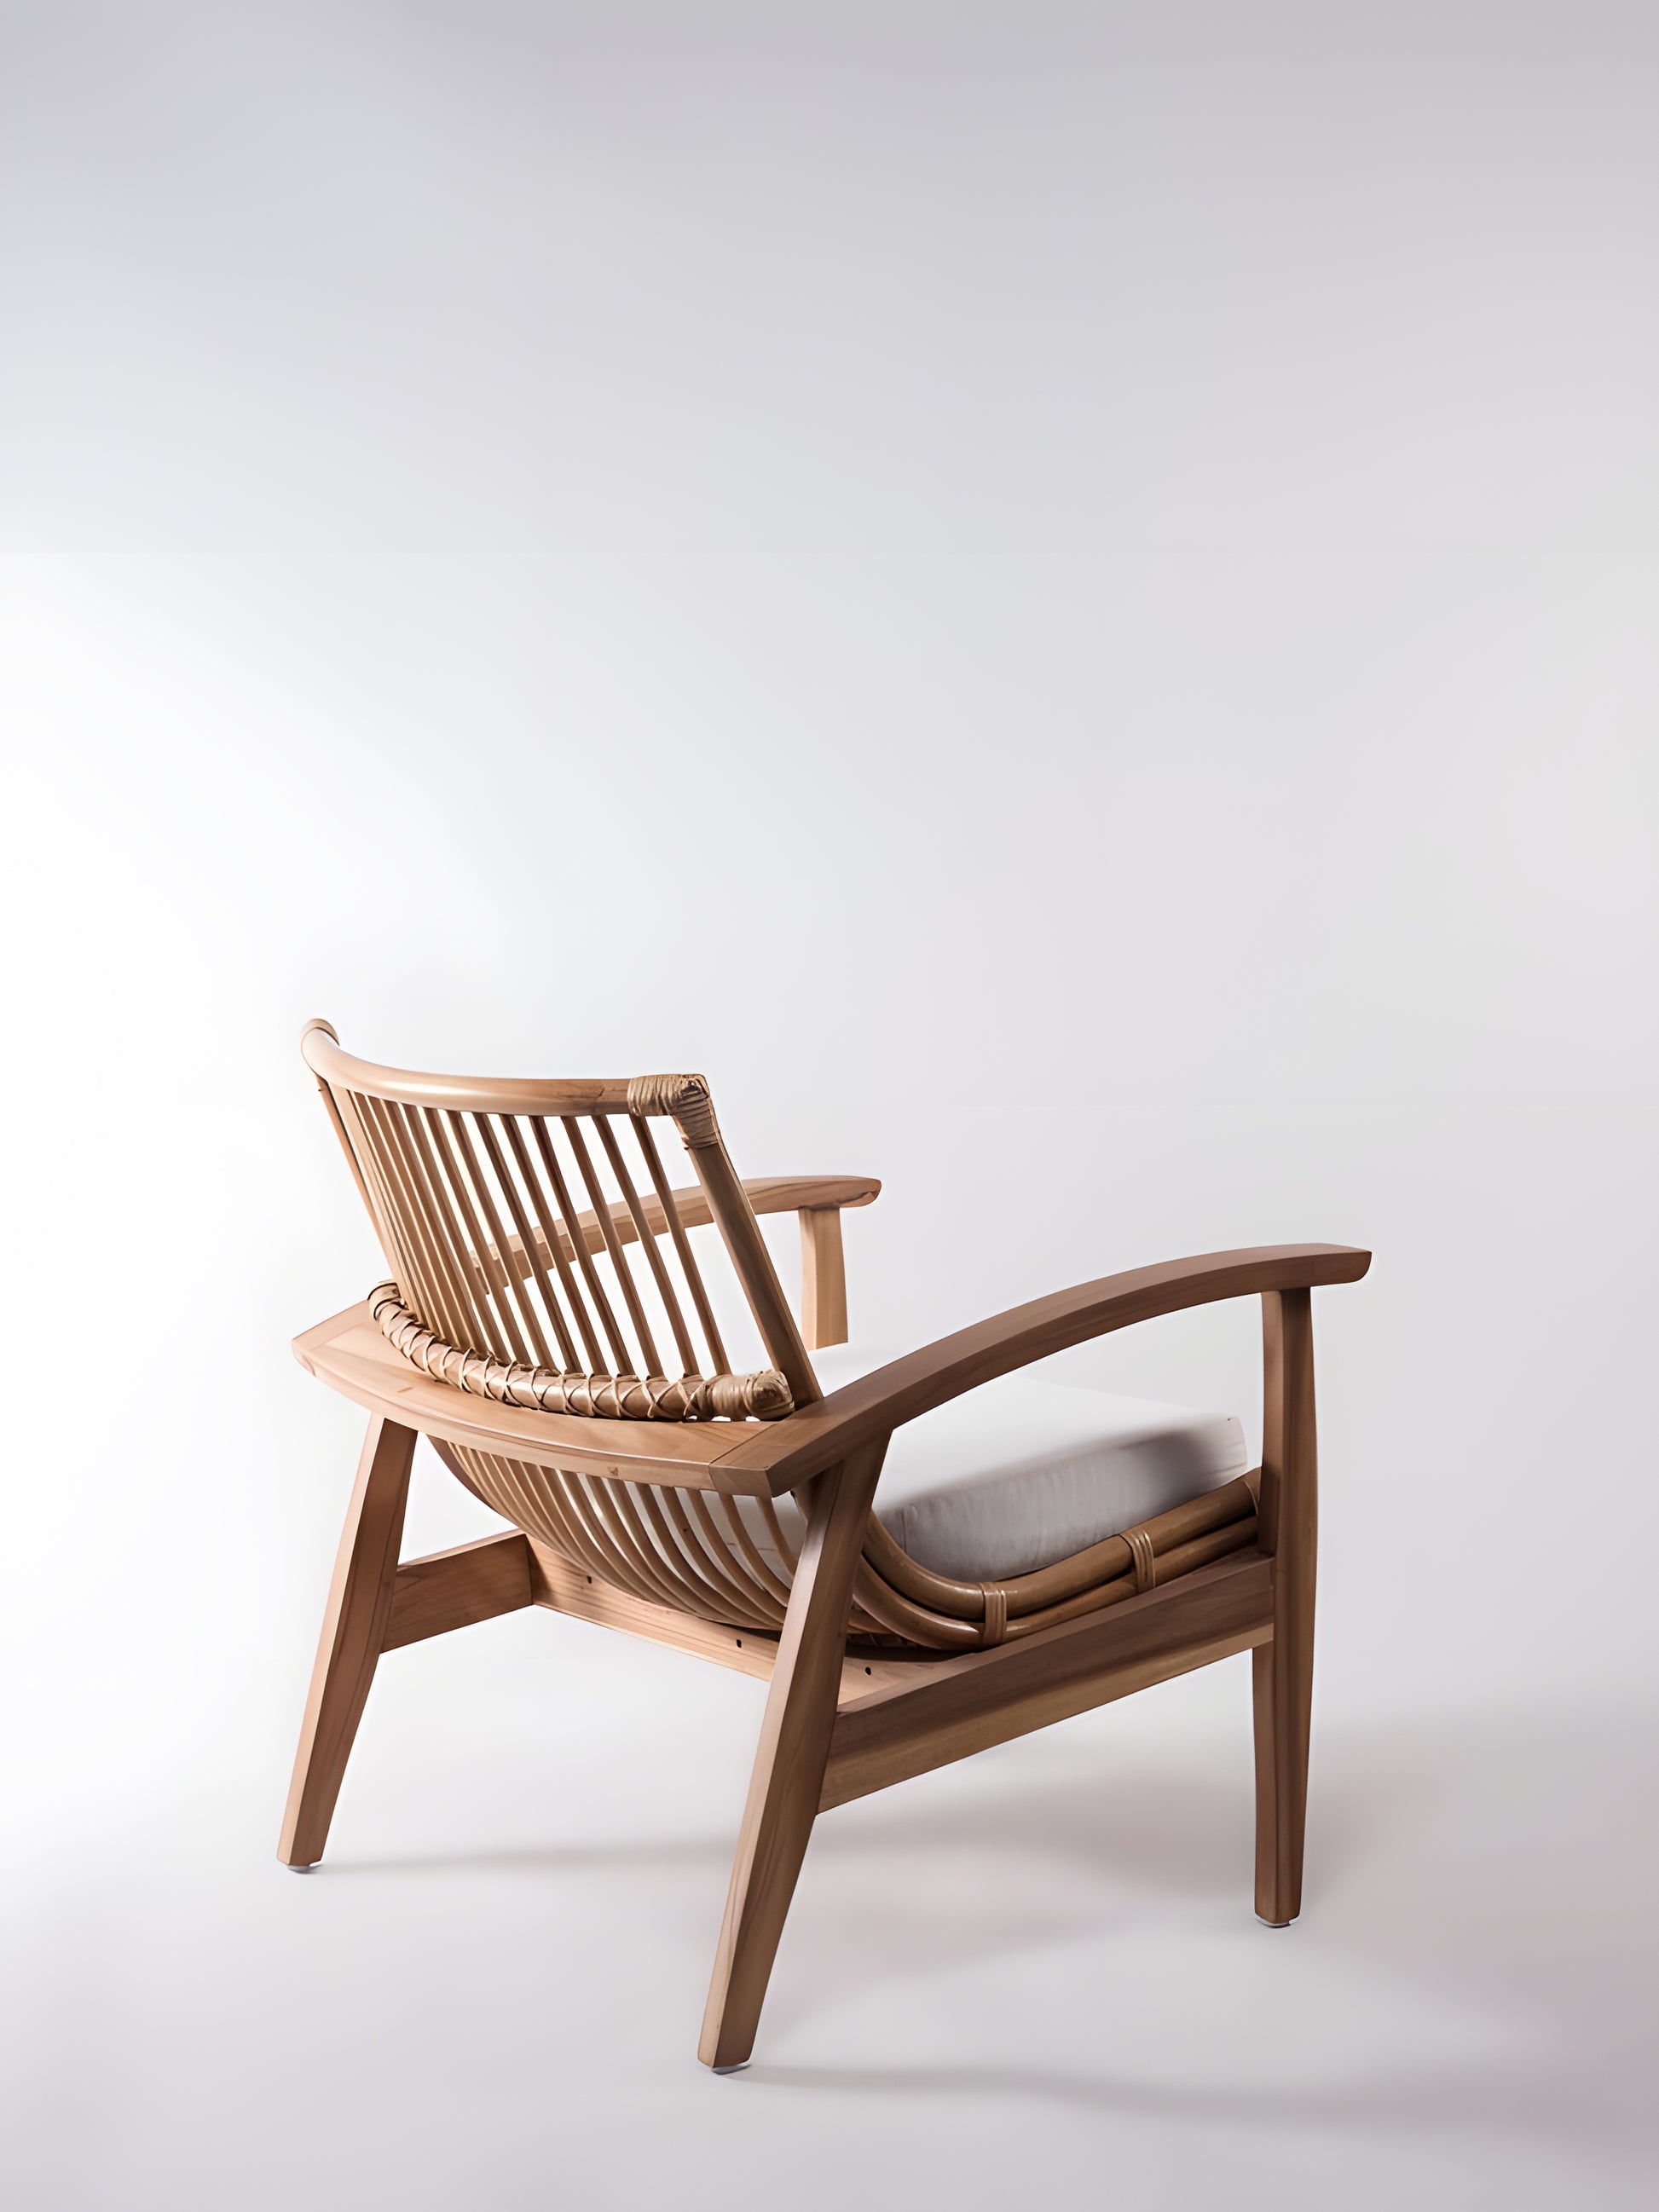 Rinjani Teak & Rattan Armchair back side view by Mellowdays Furniture